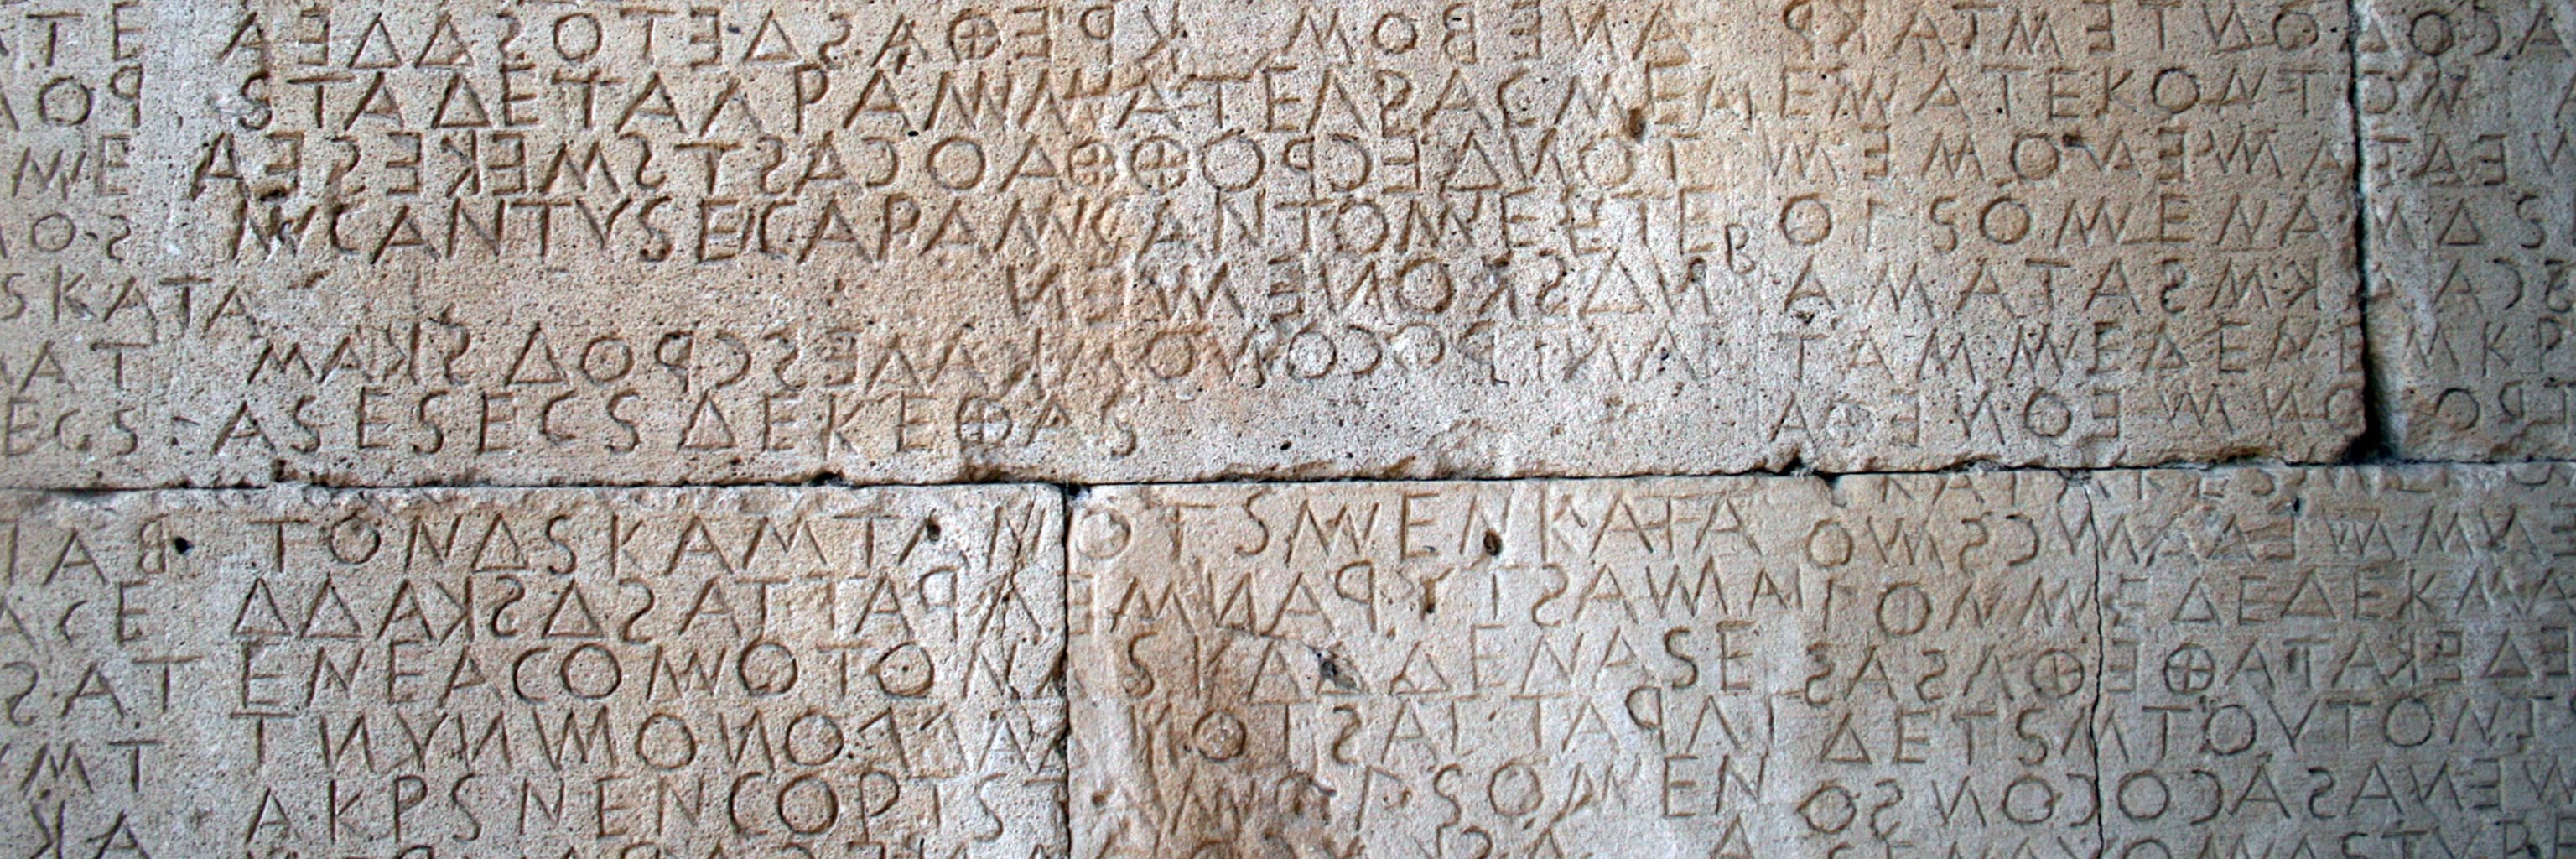 language inscriptions on a stone wall